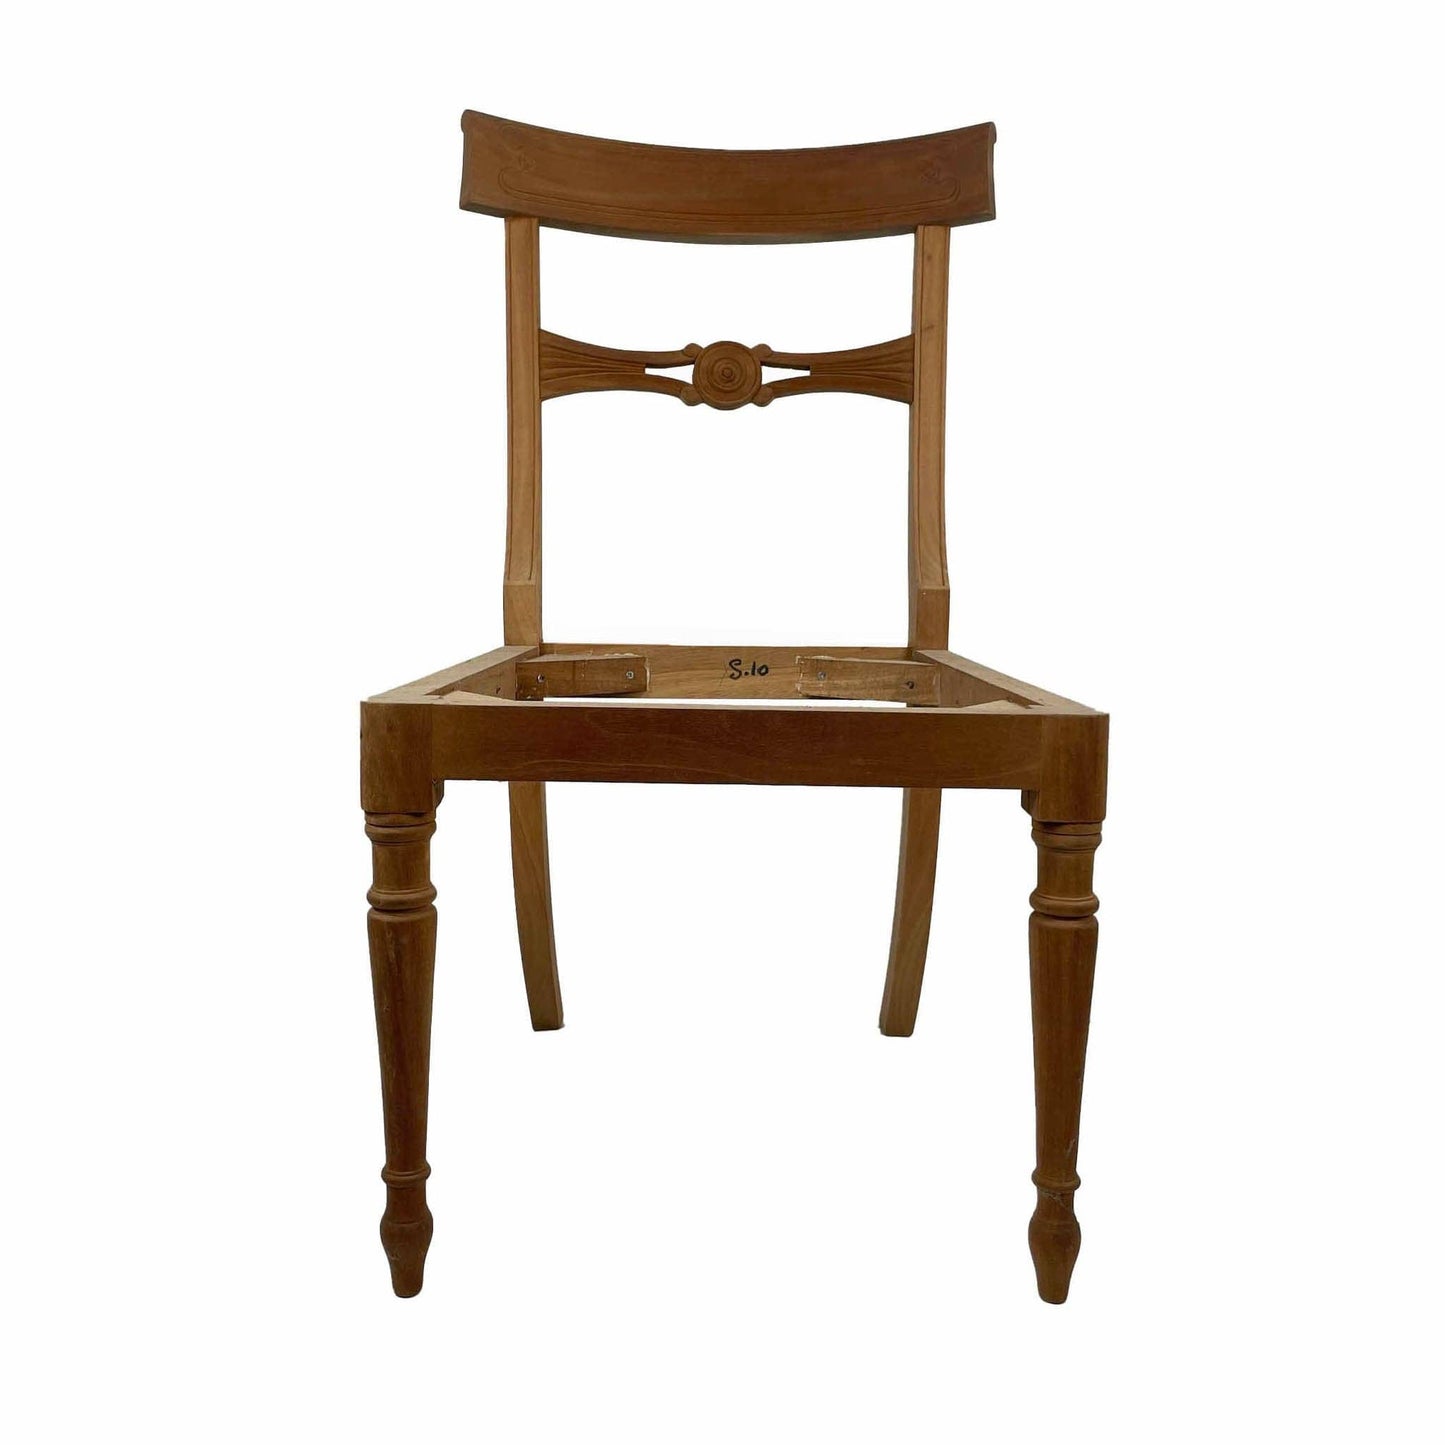 mahogany chair frame